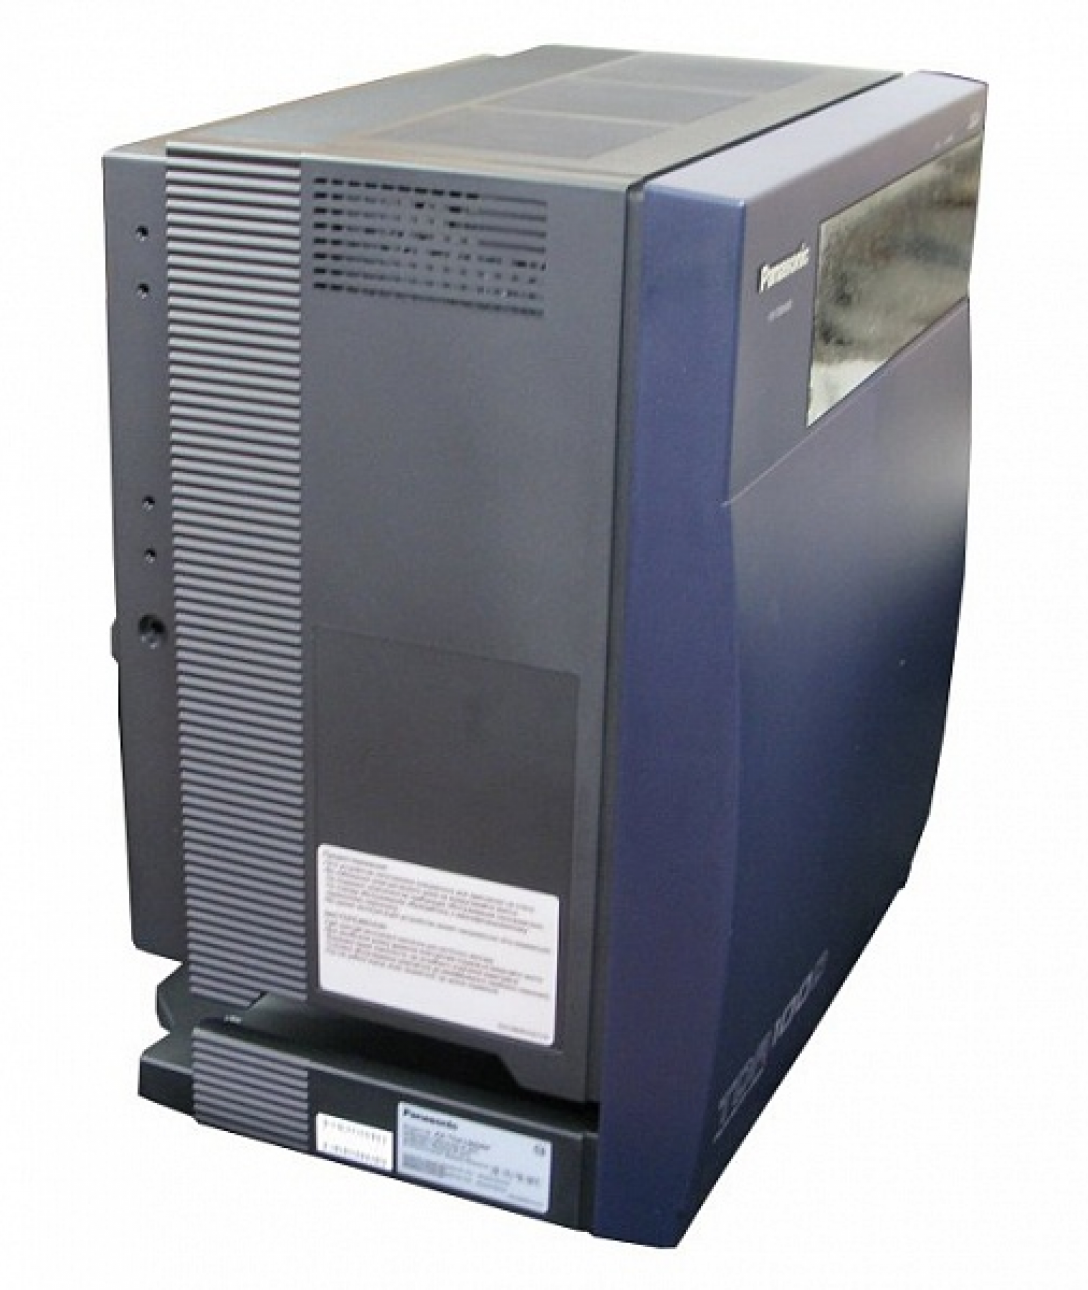 Panasonic KX-TDA100RU